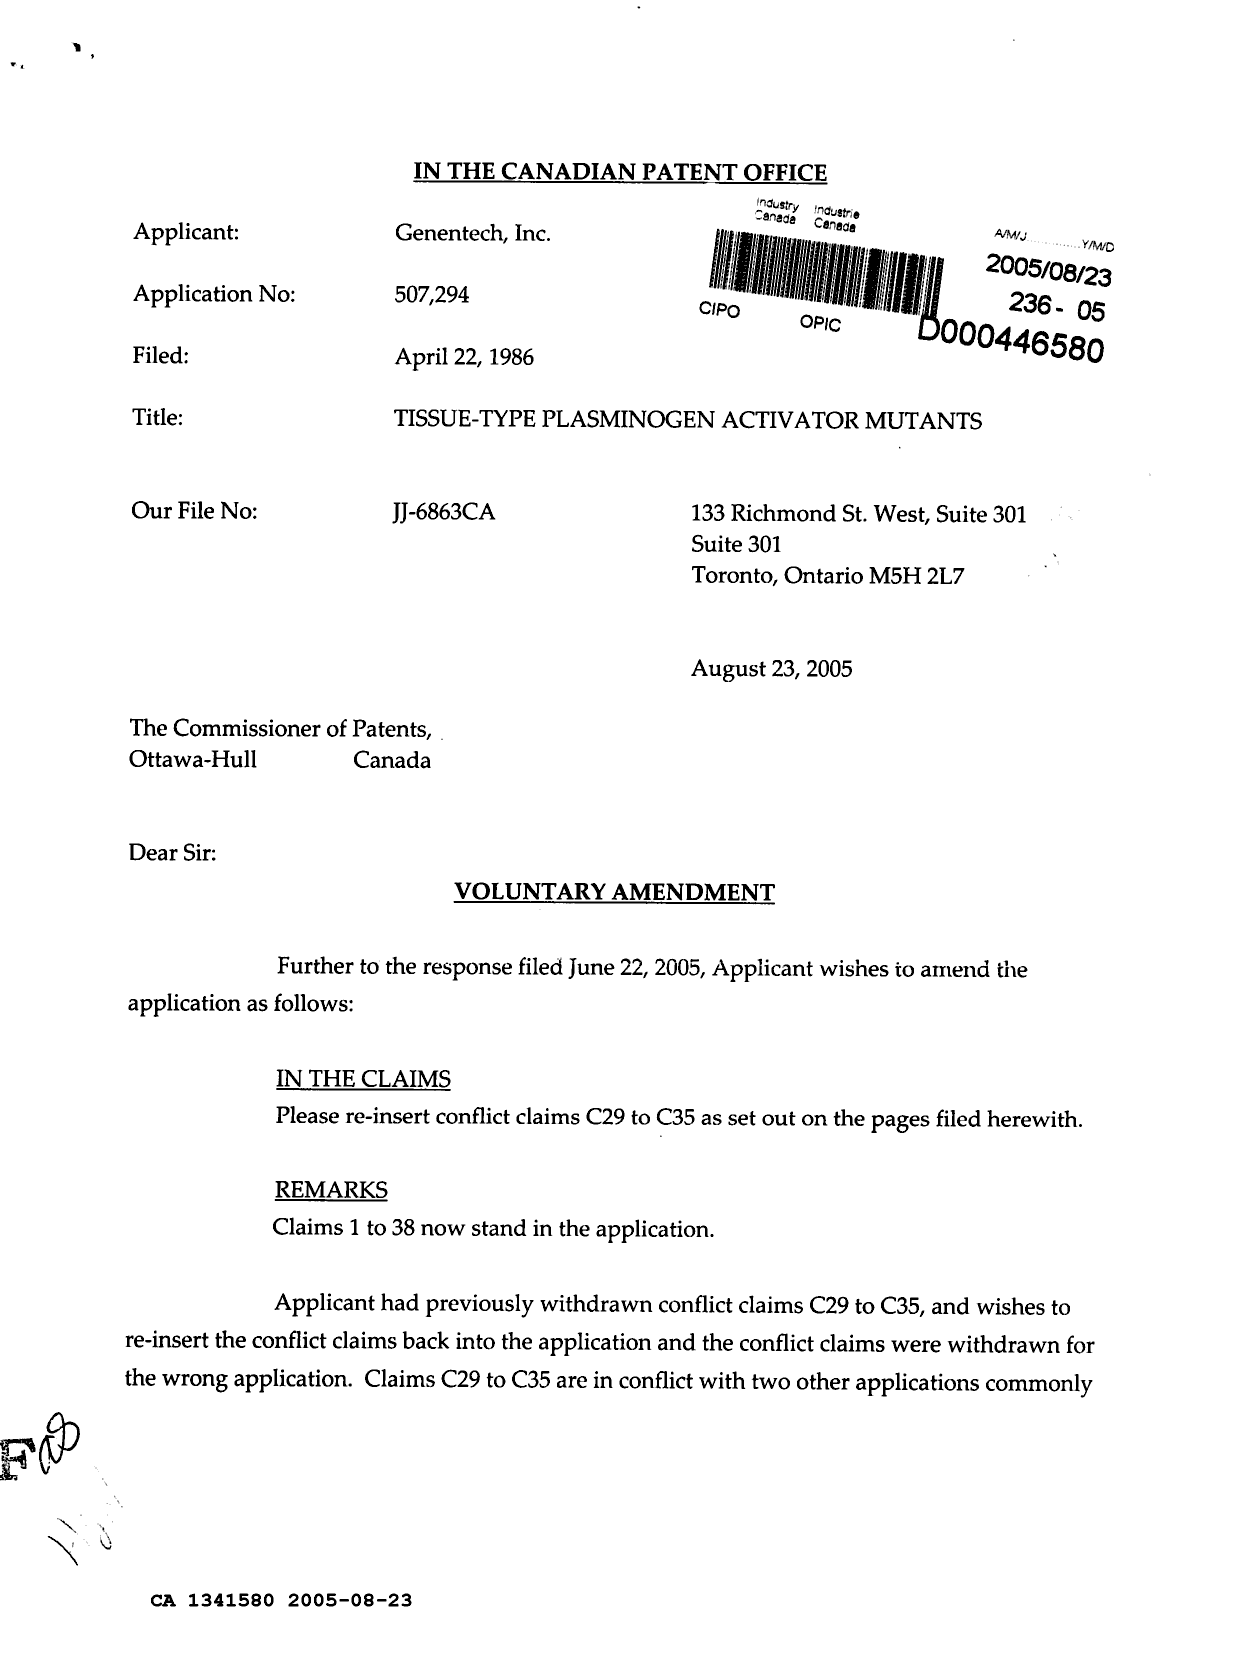 Canadian Patent Document 1341580. Prosecution Correspondence 20050823. Image 1 of 2